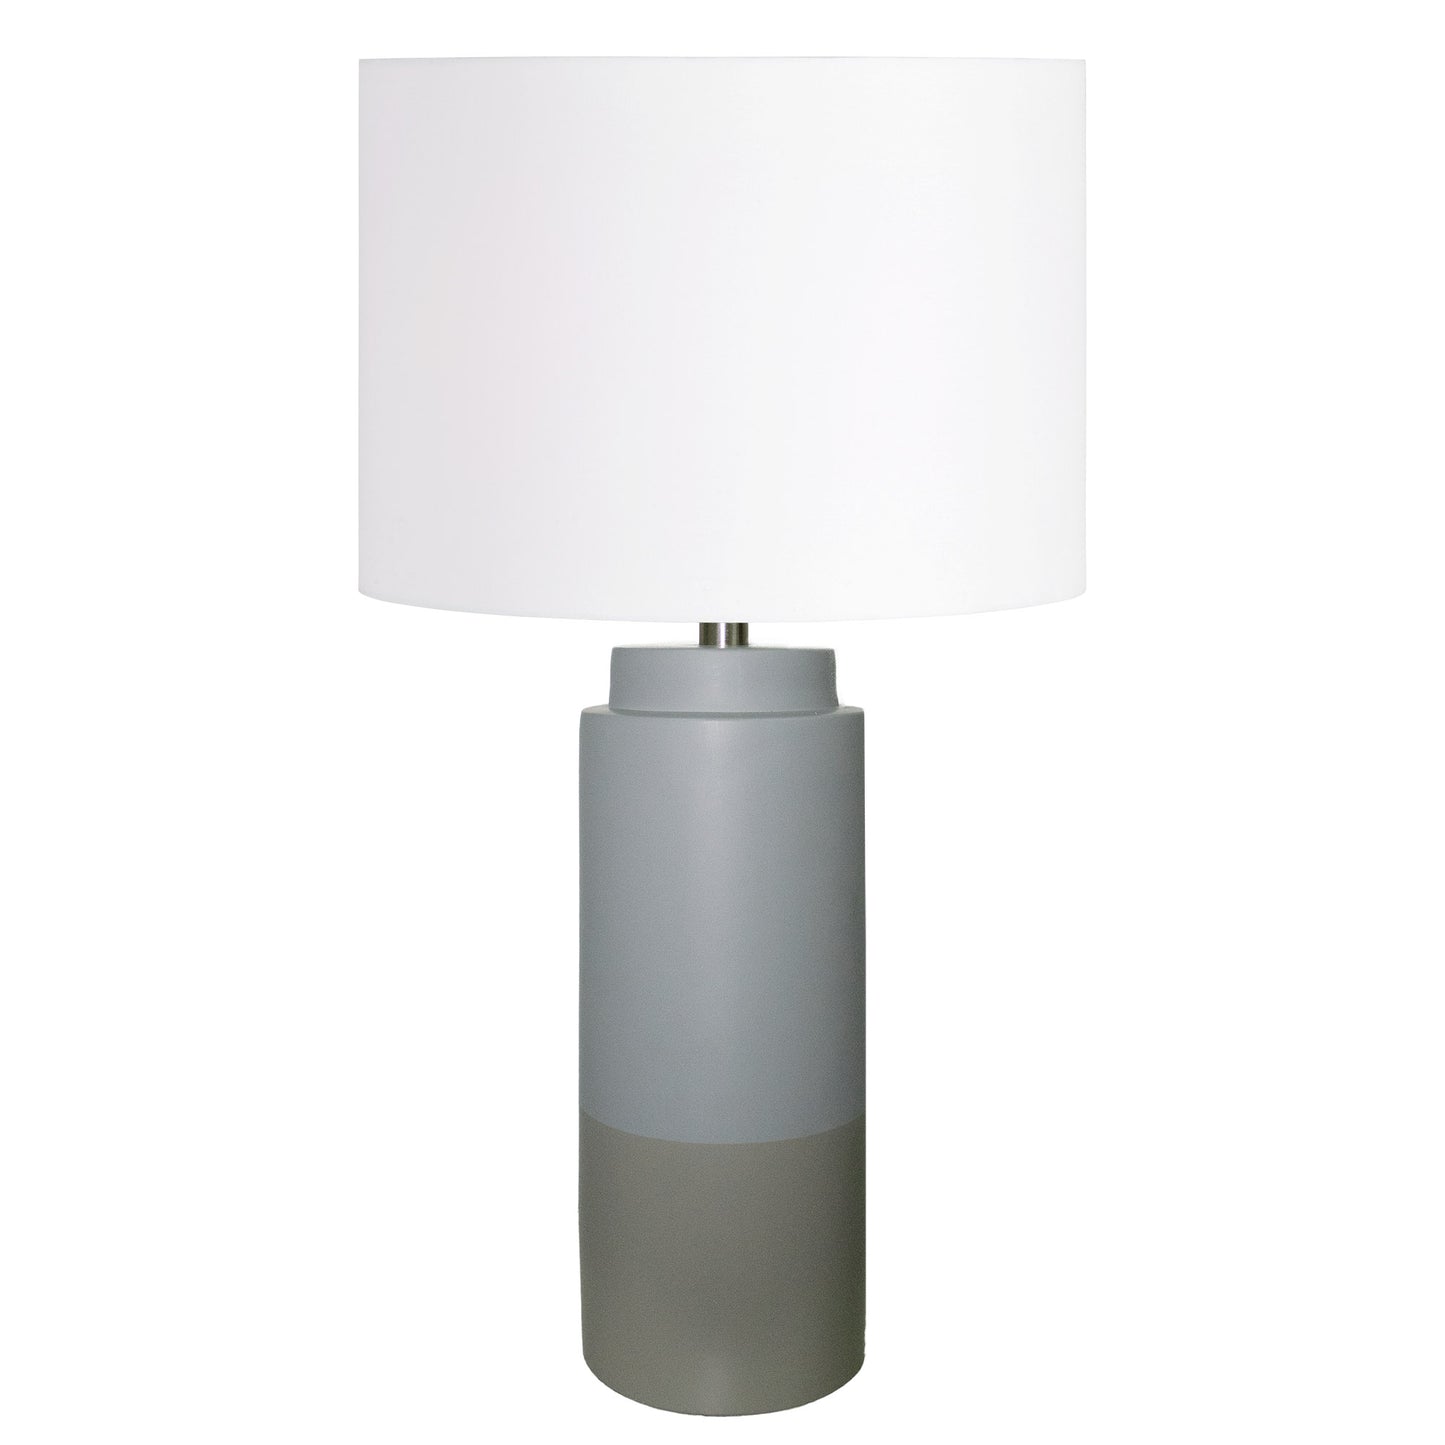 Lagertha Table Lamp